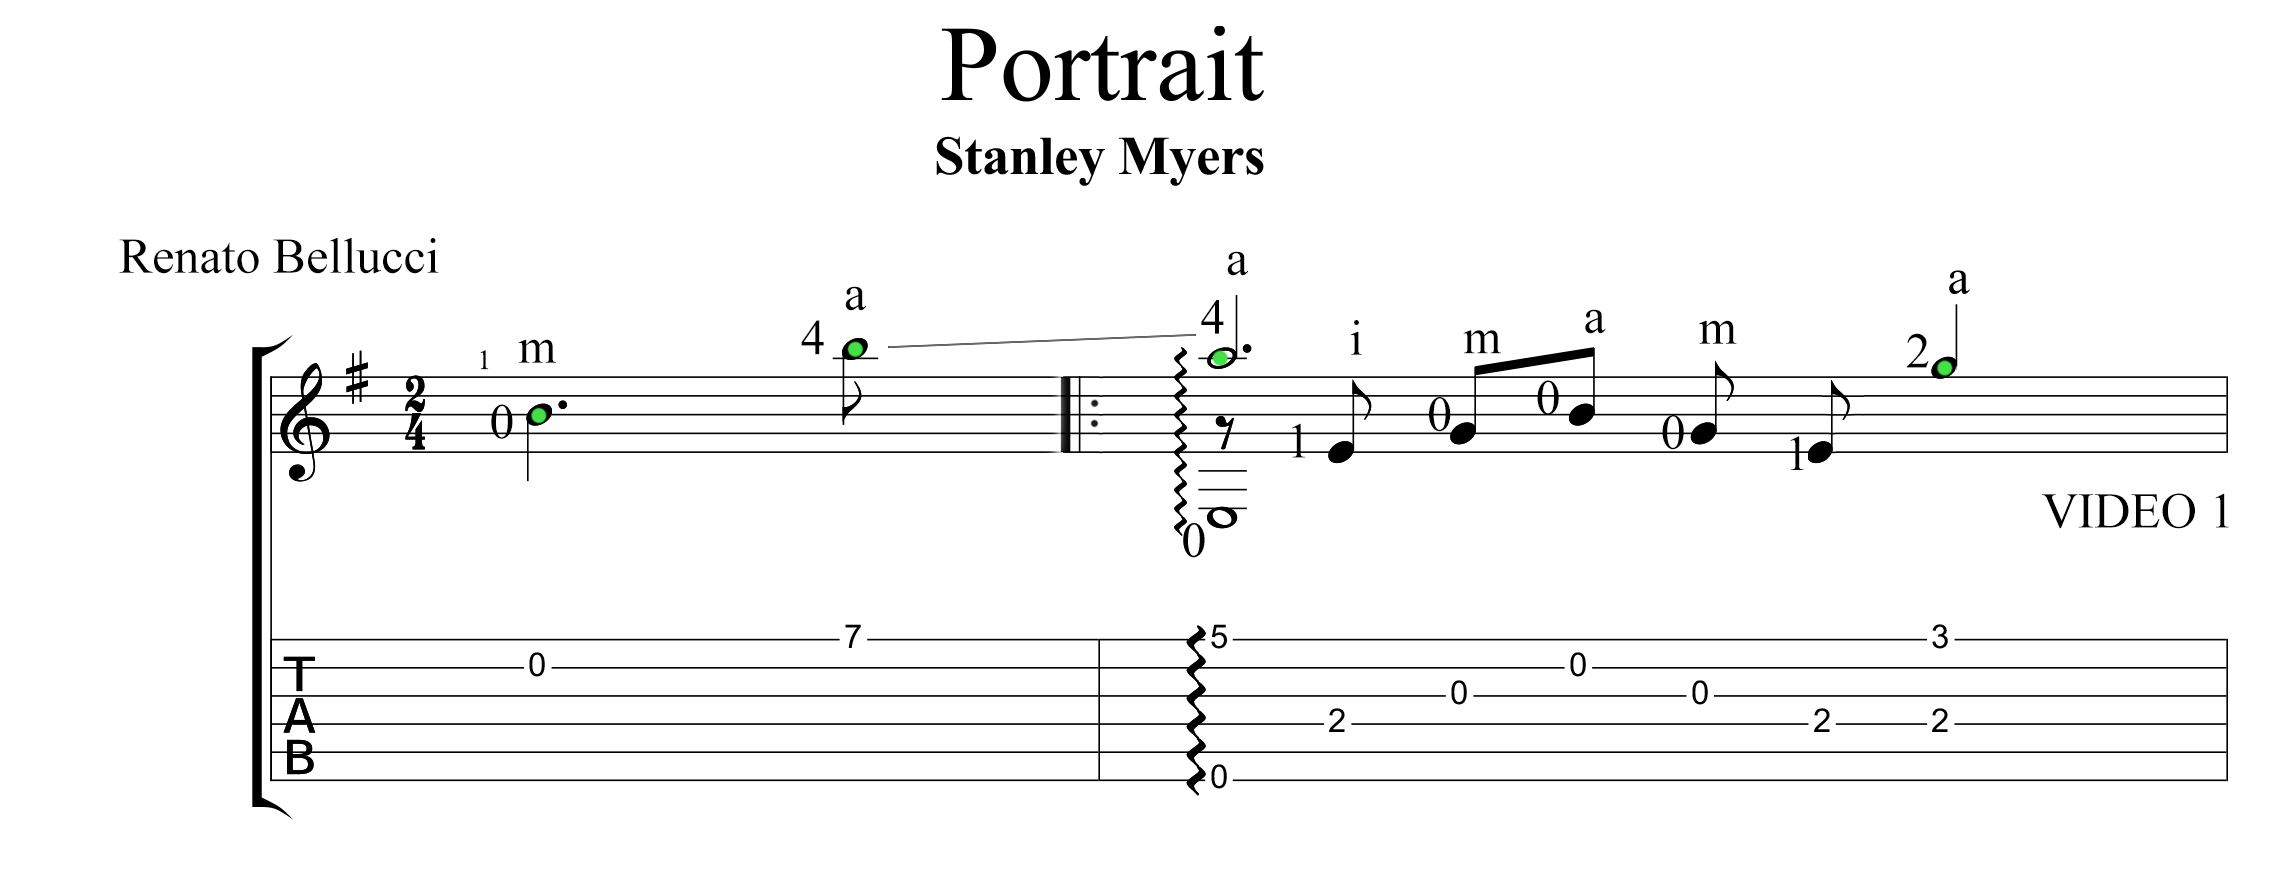 Stanley Myers Portrait Staff 17